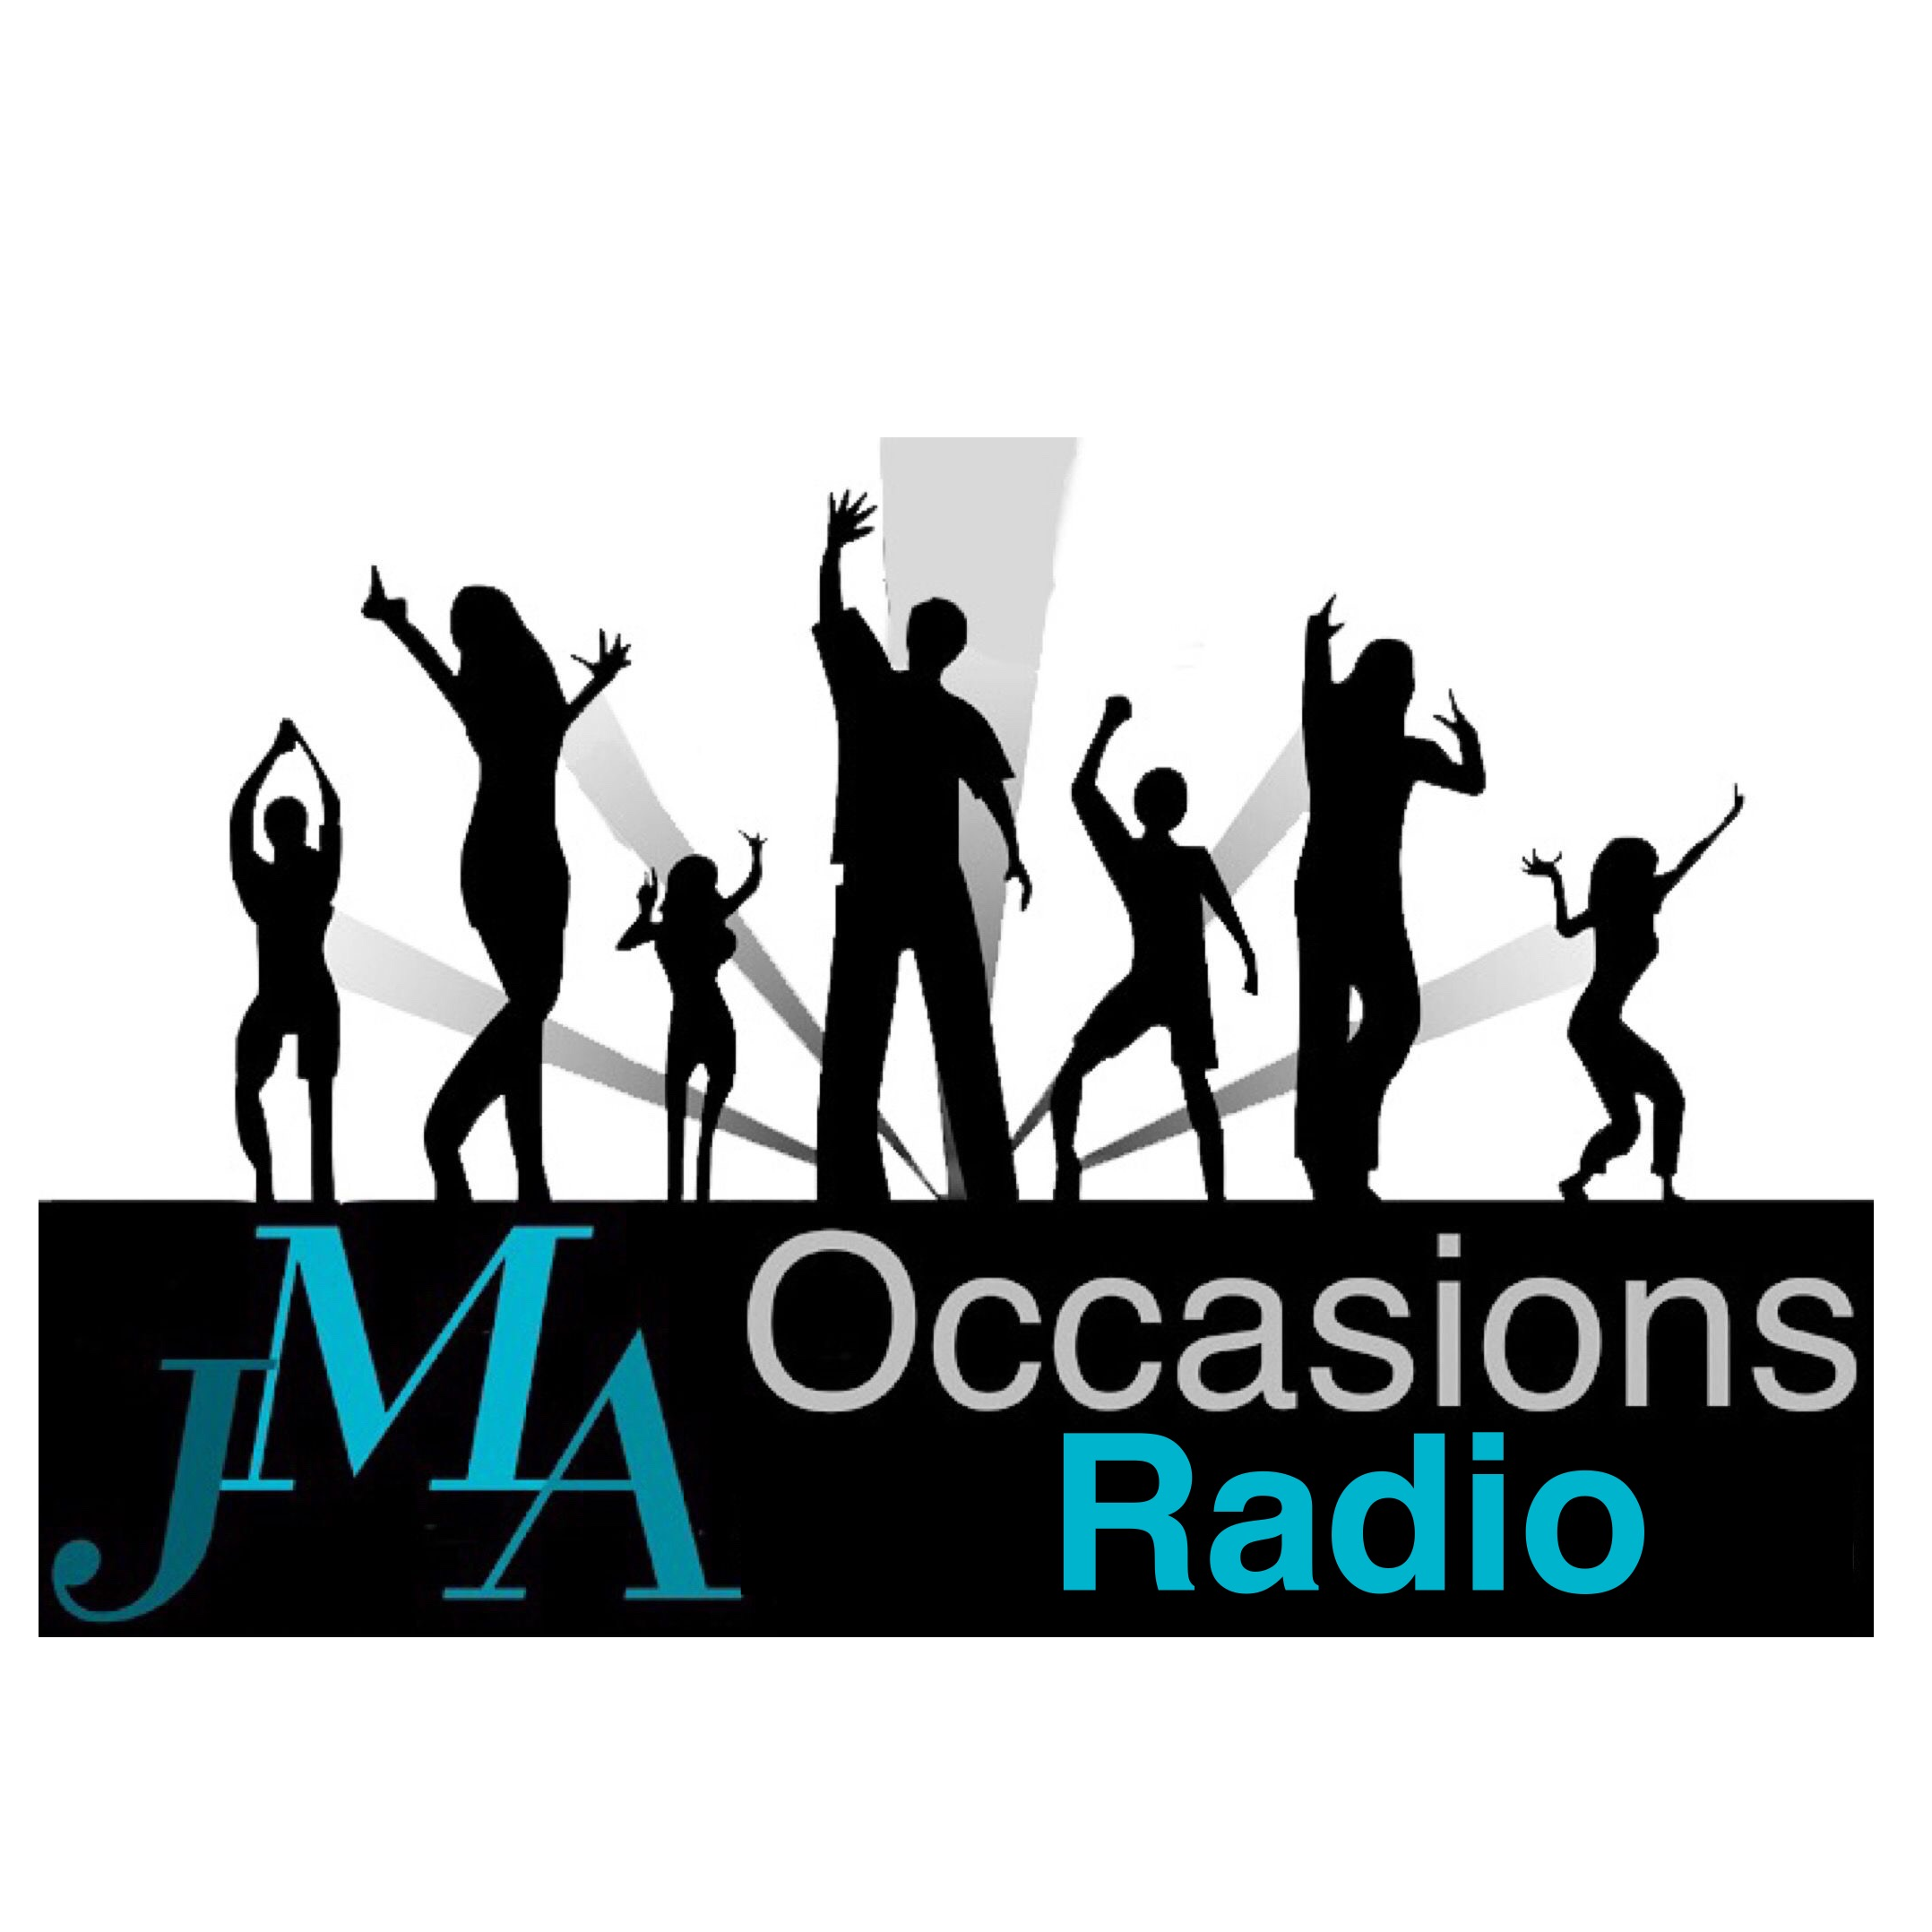 JMA Occasions Radio